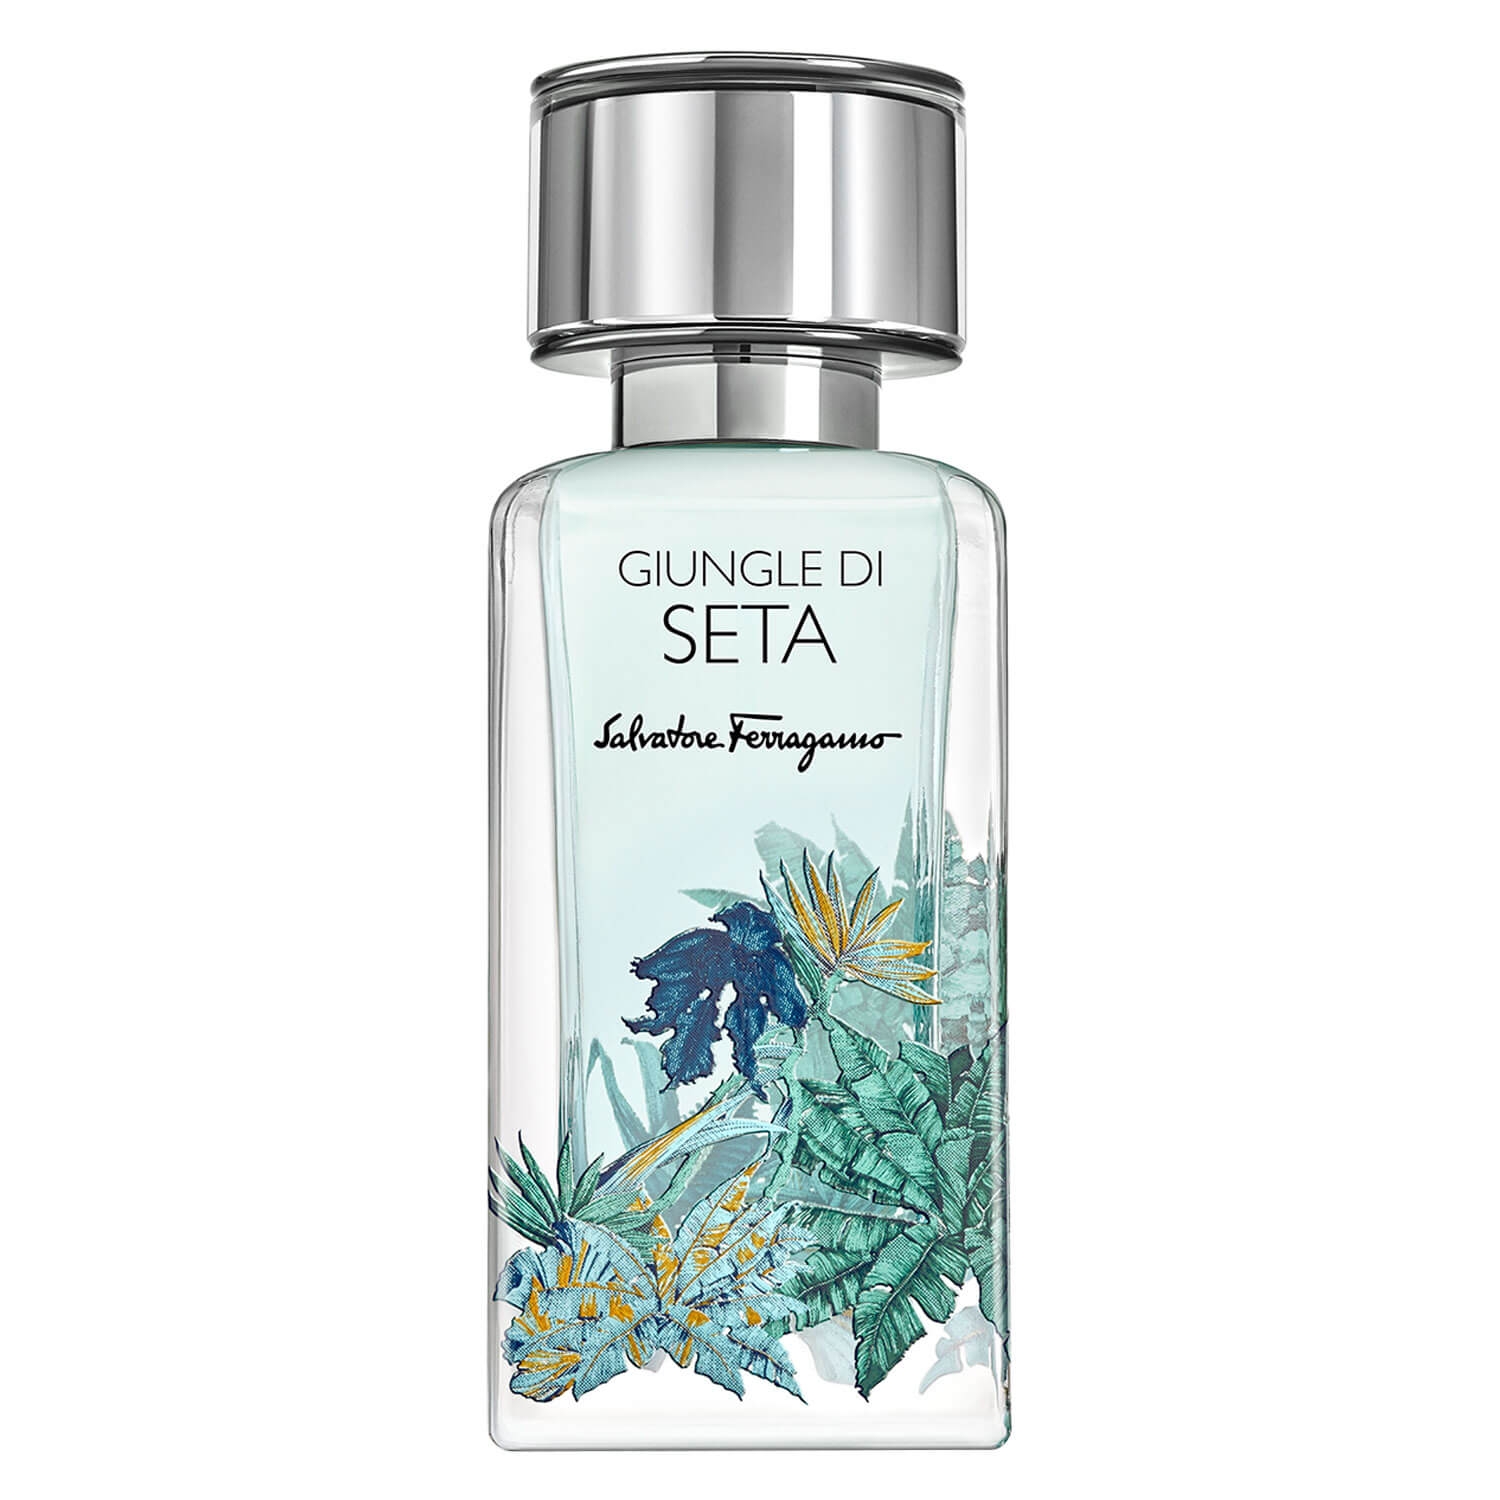 Product image from Salvatore Ferragamo - Giungle Di Seta Eau de Parfum